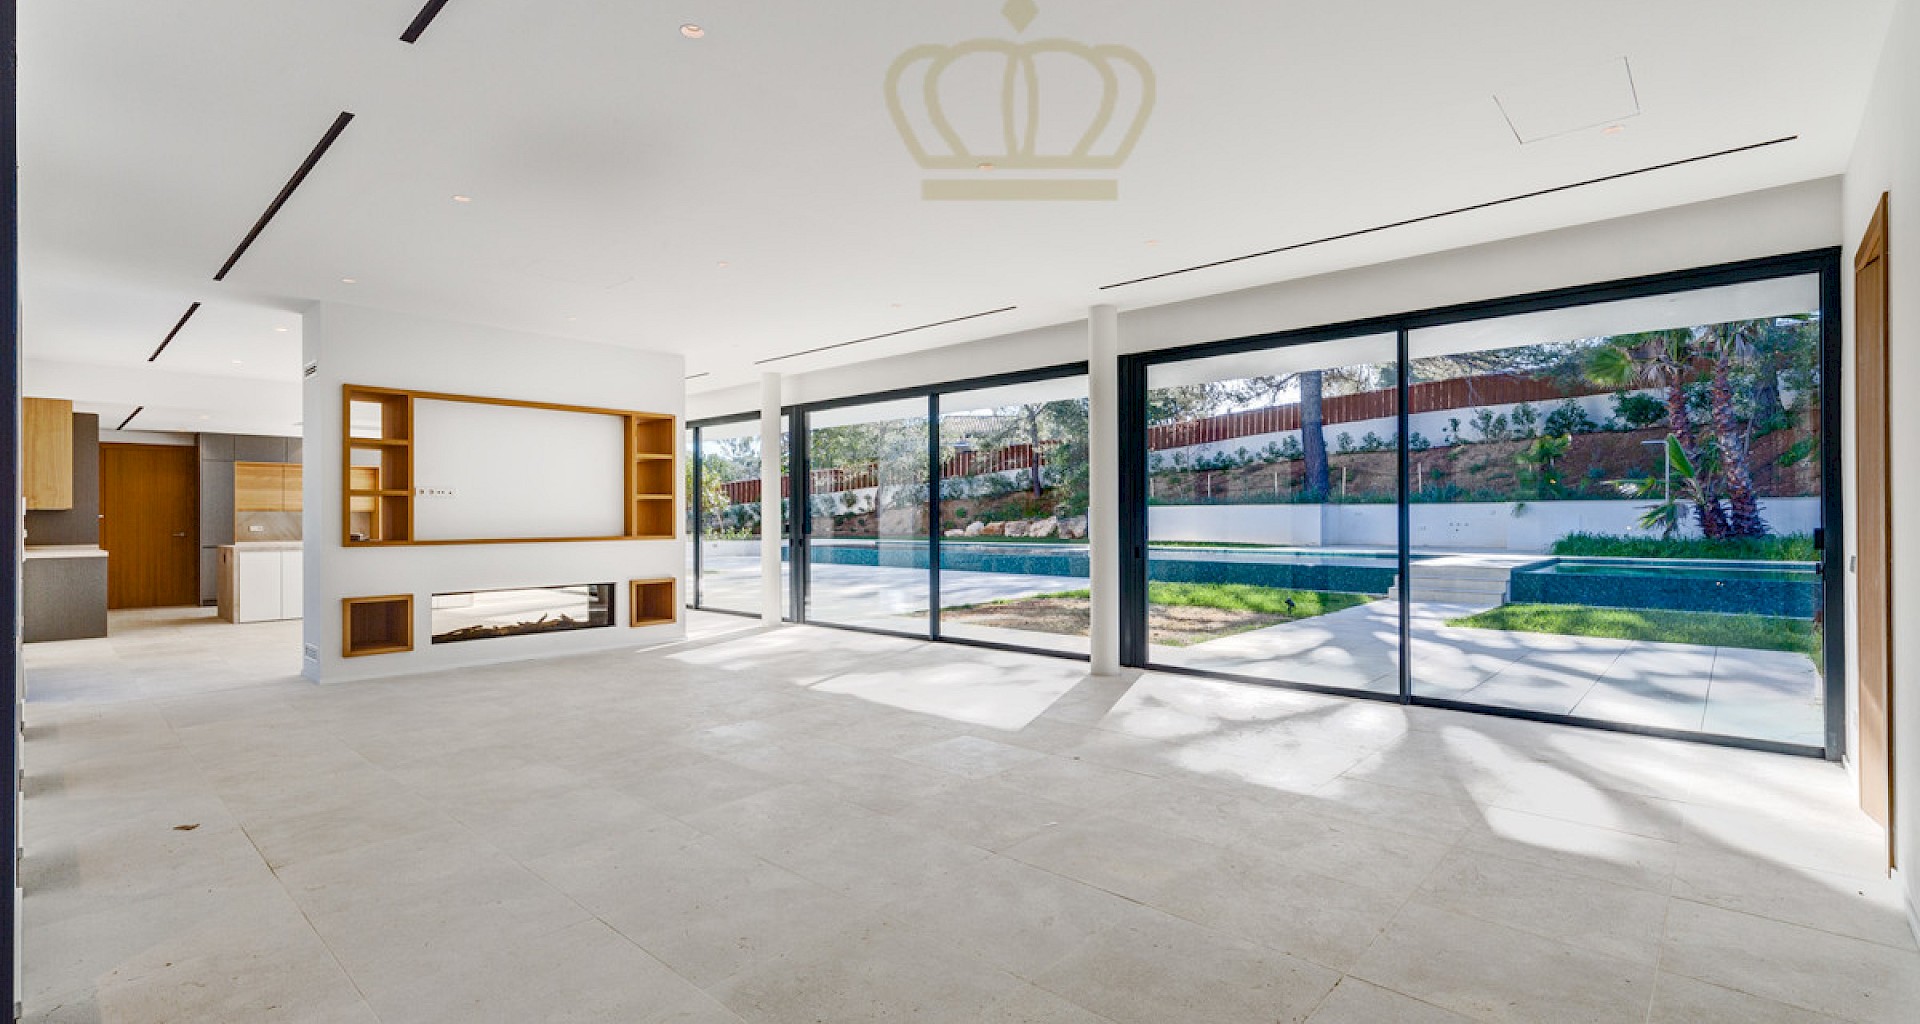 KROHN & LUEDEMANN Modern, imposing new villa in Santa Ponsa with pool and garden 